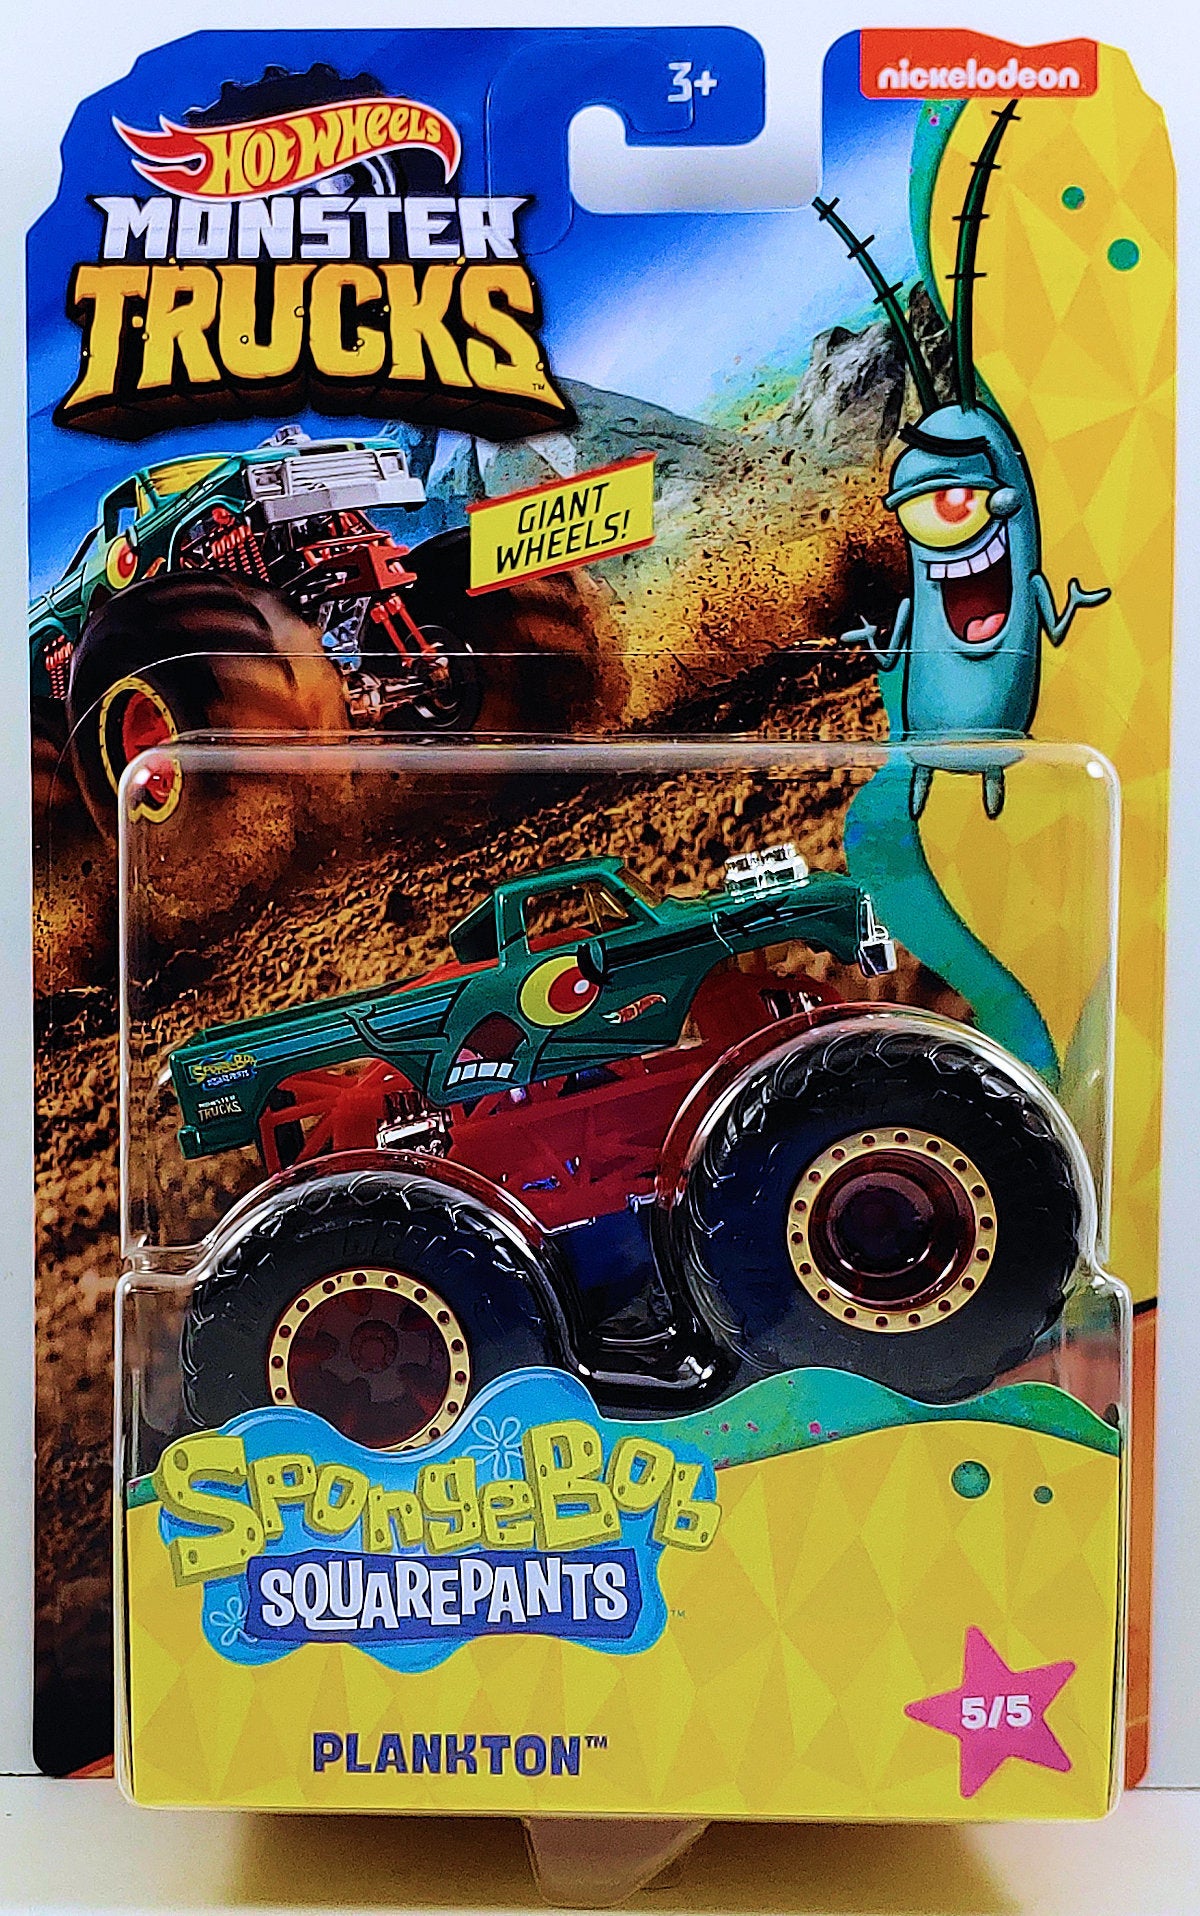 Hot Wheels 2020 - Monster Trucks / Spongebob Squarepants 5/5 - Plankton (Big Foot) - Teal